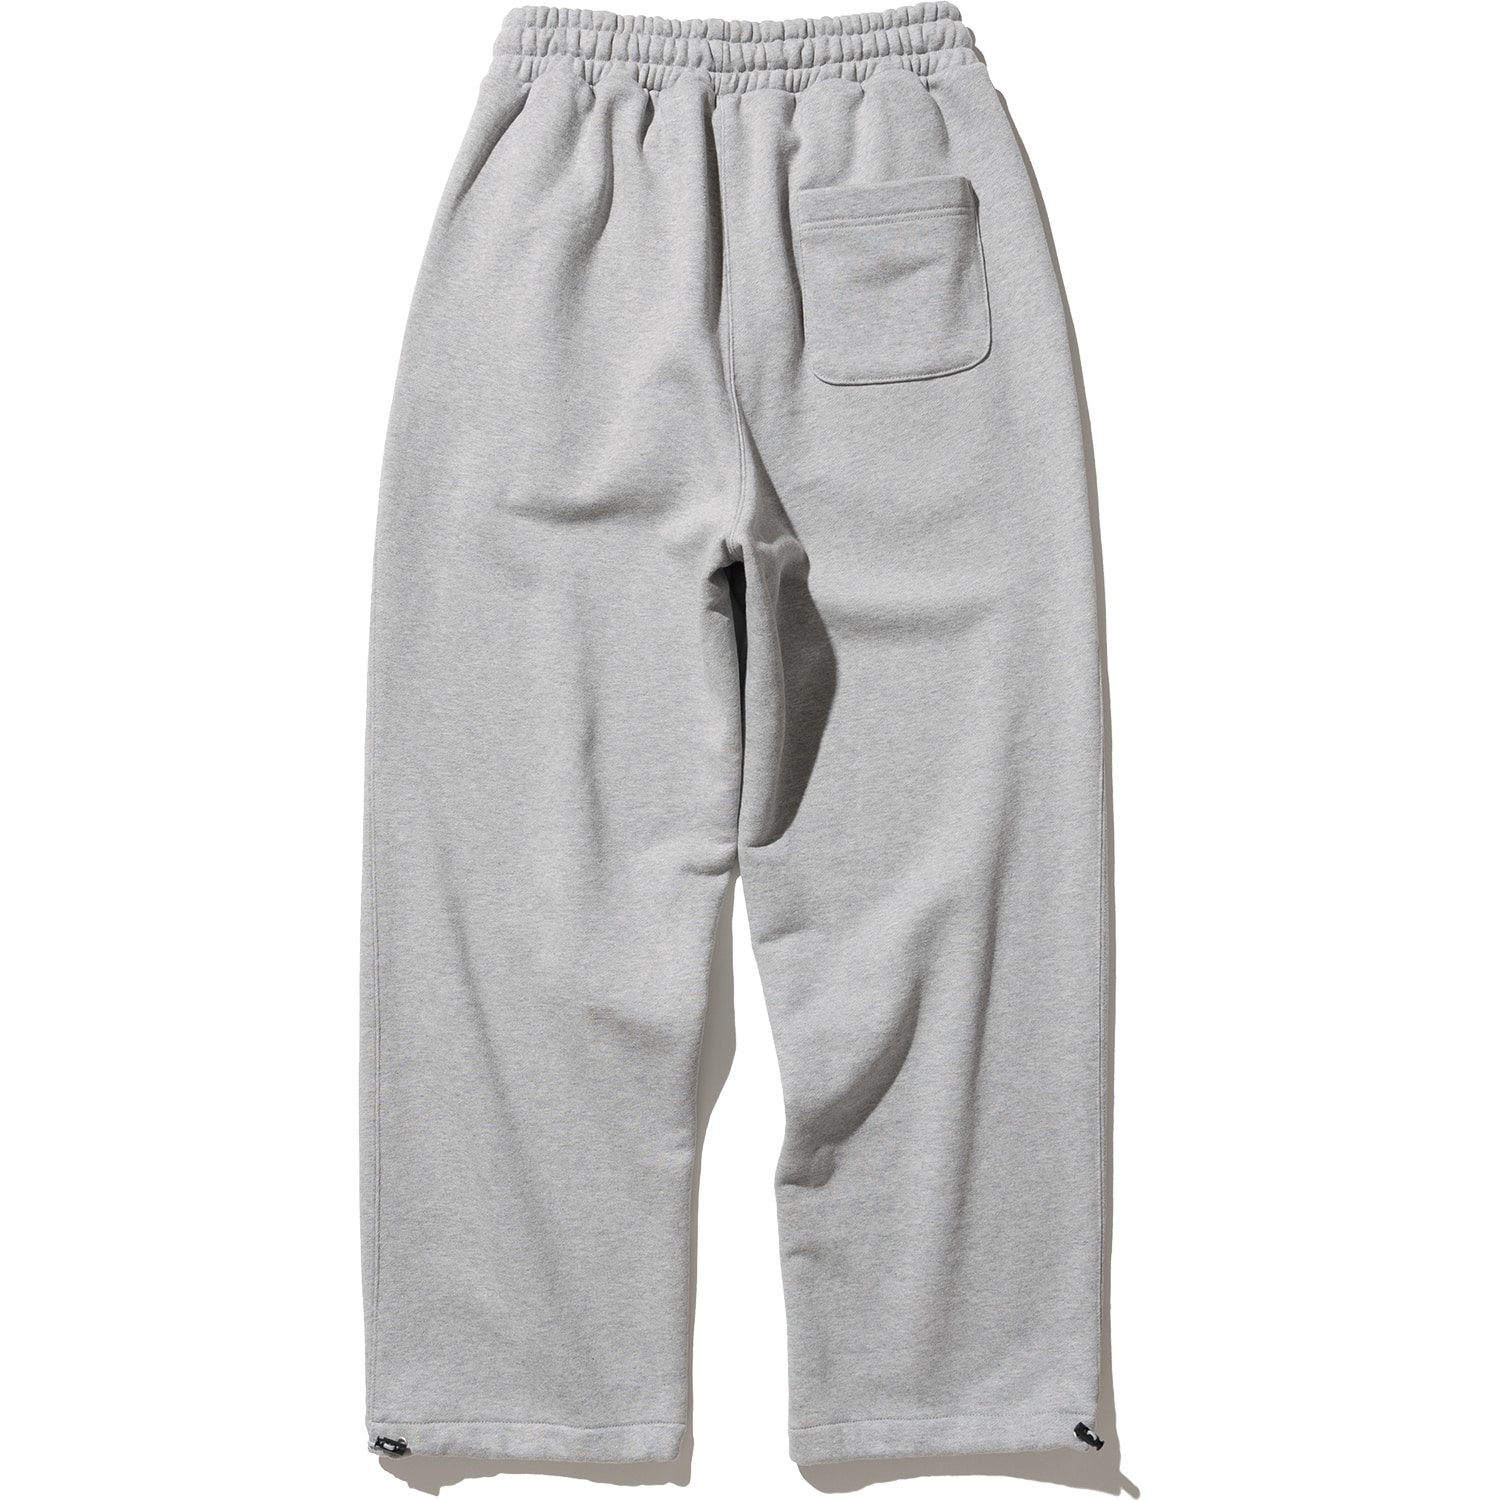 String Sweat Pants - Grey,NOT4NERD